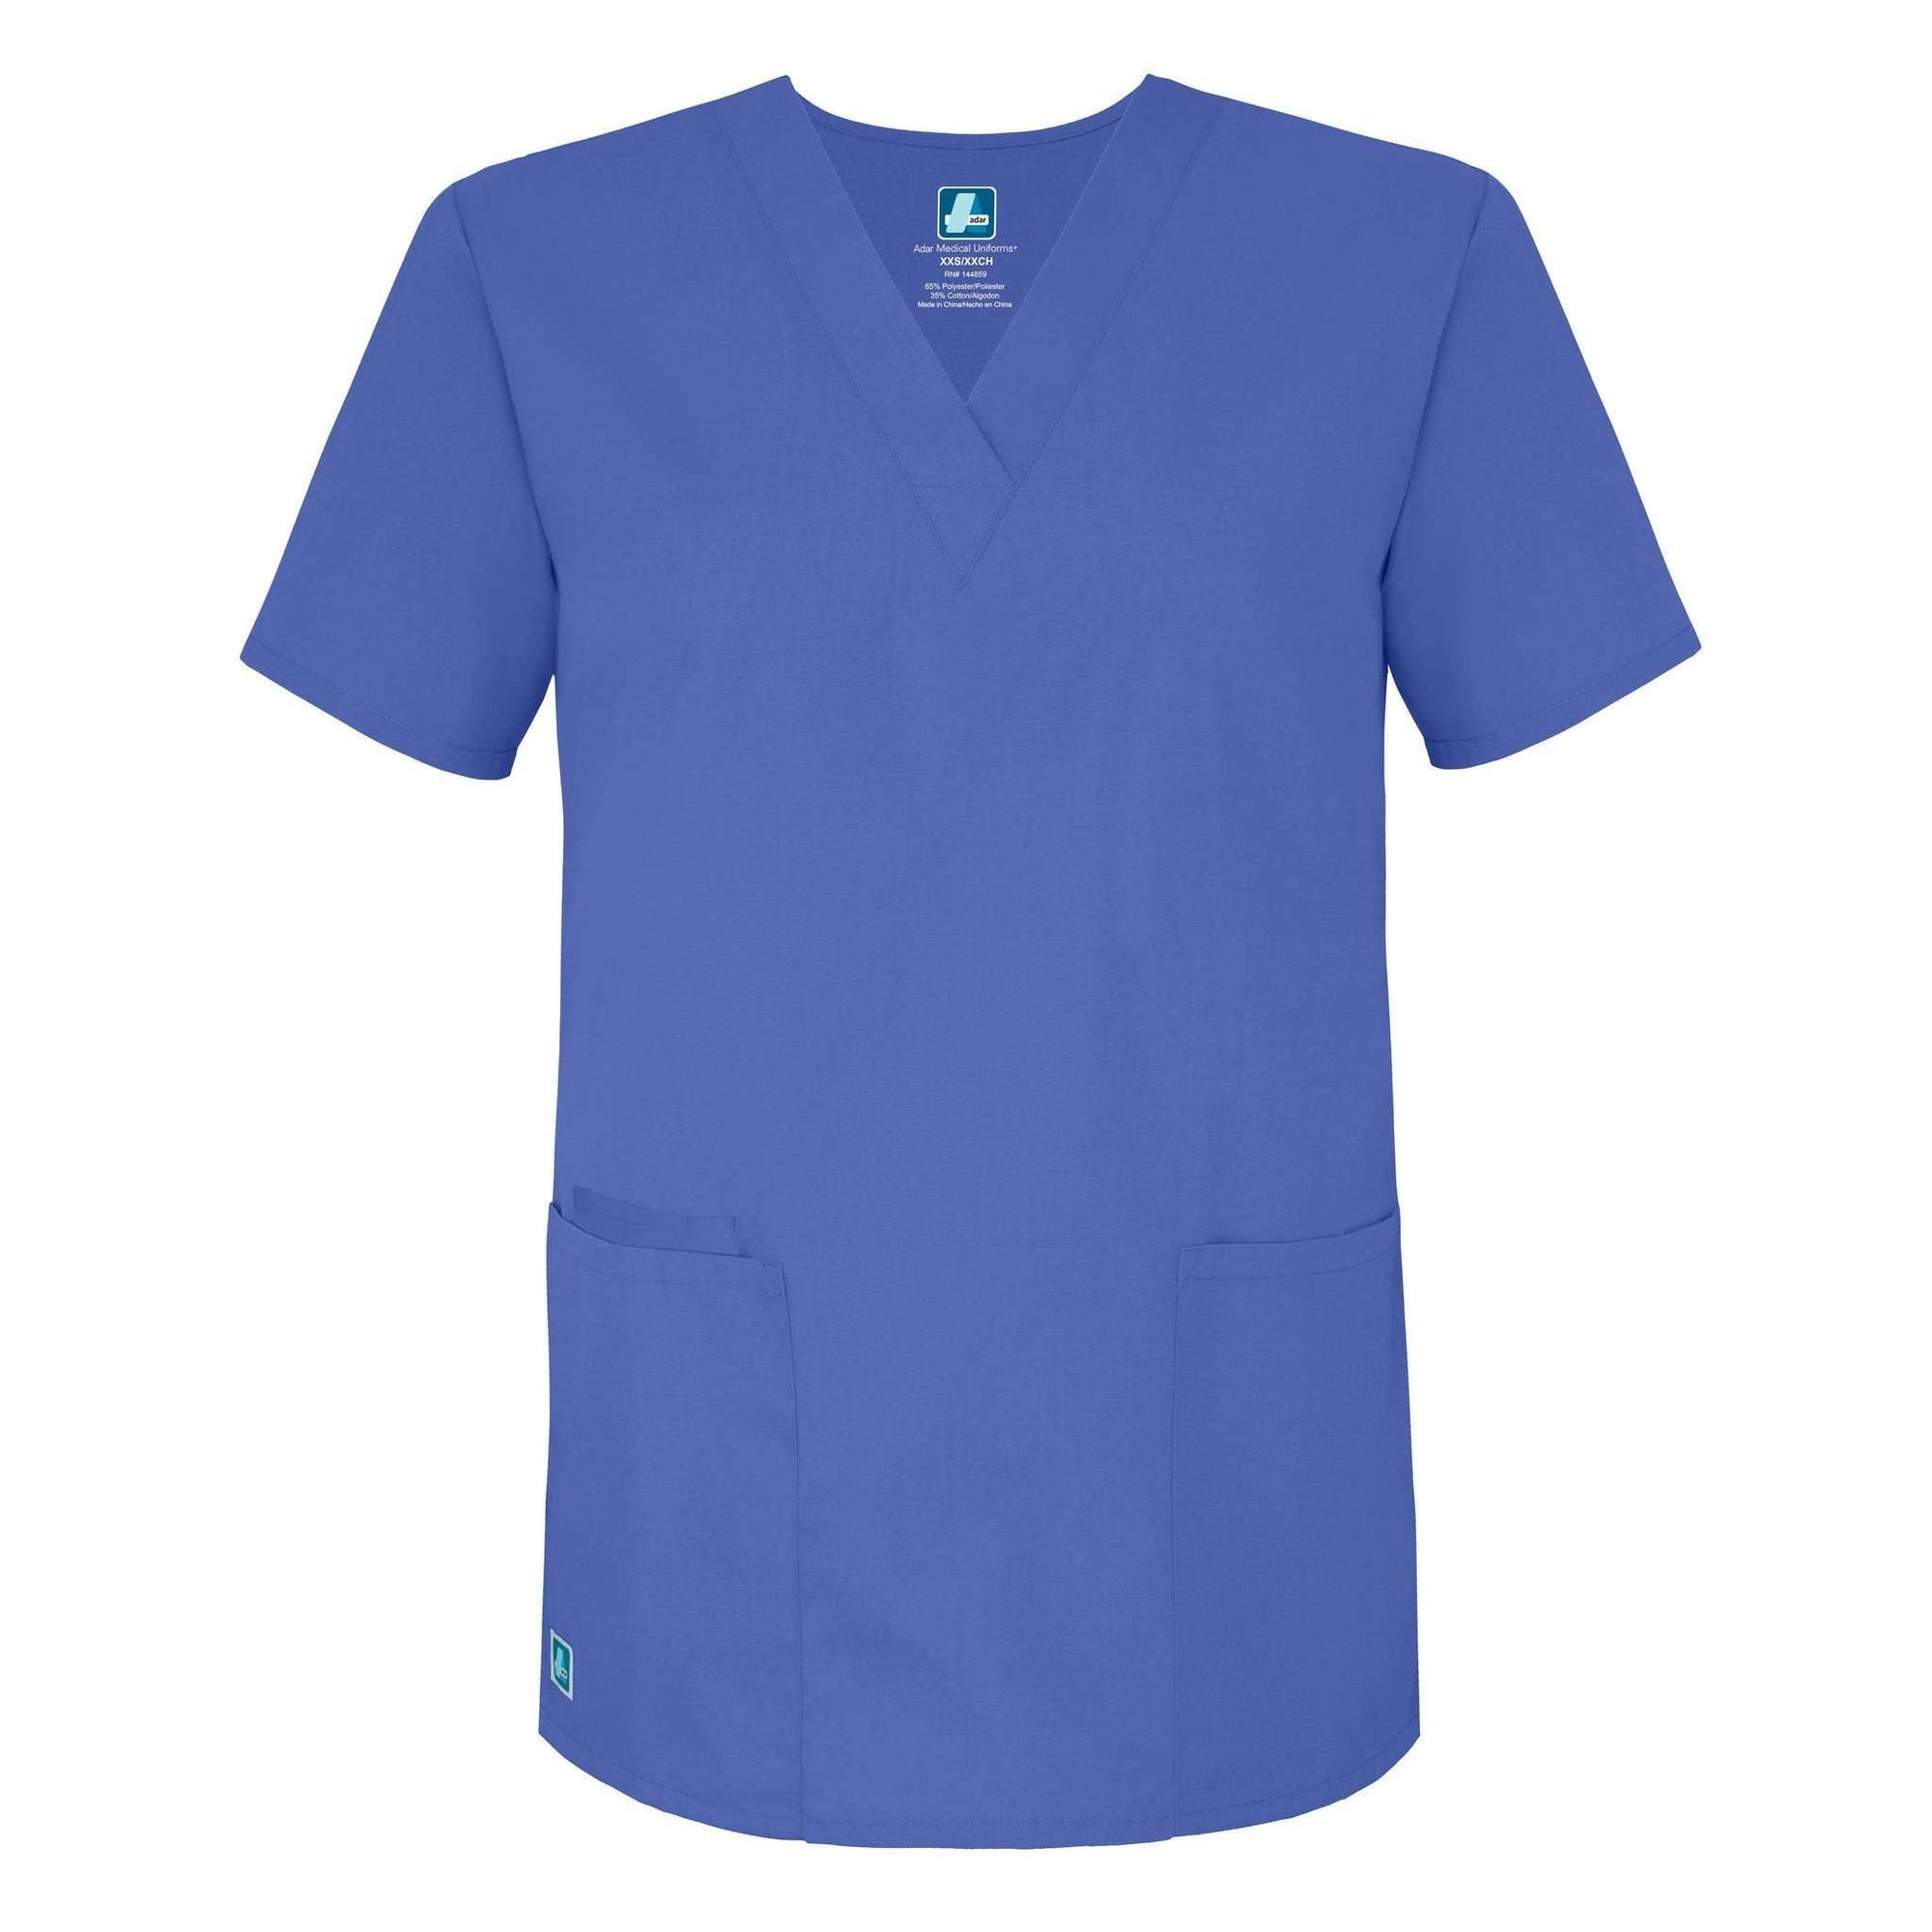  Adar - uniforms Medical Uniform Tops uniforms online Adar Universal Unisex V-Neck 2 Pocket Scrub Top Ceil Blue - SchoolUniforms.com